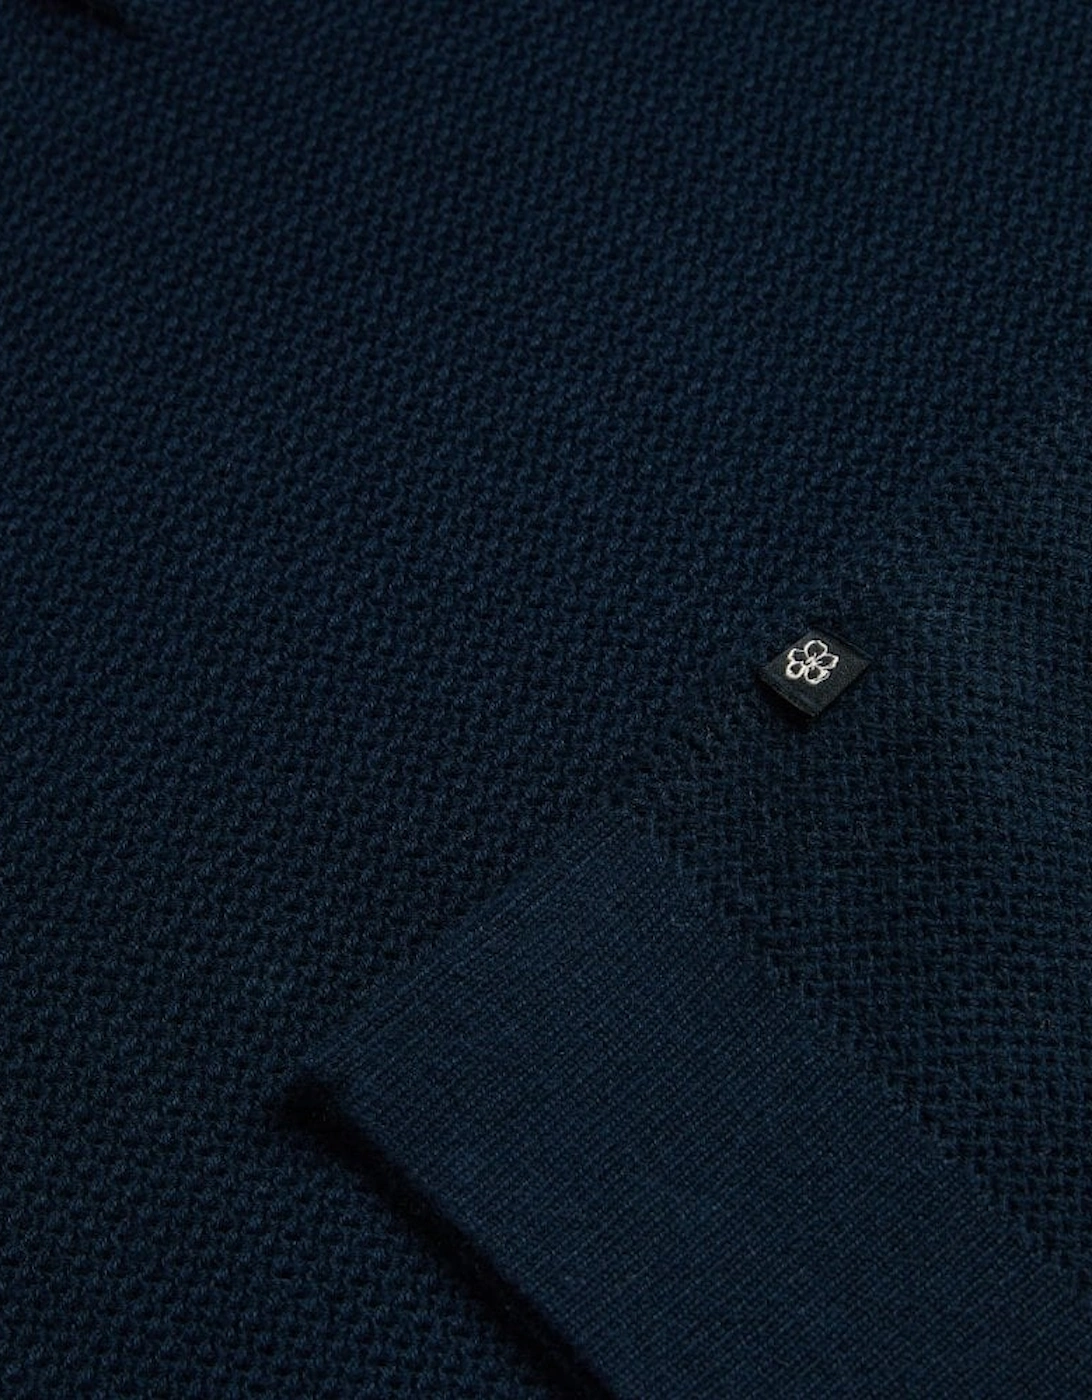 Men's Navy Knitted Imago Polo Shirt.